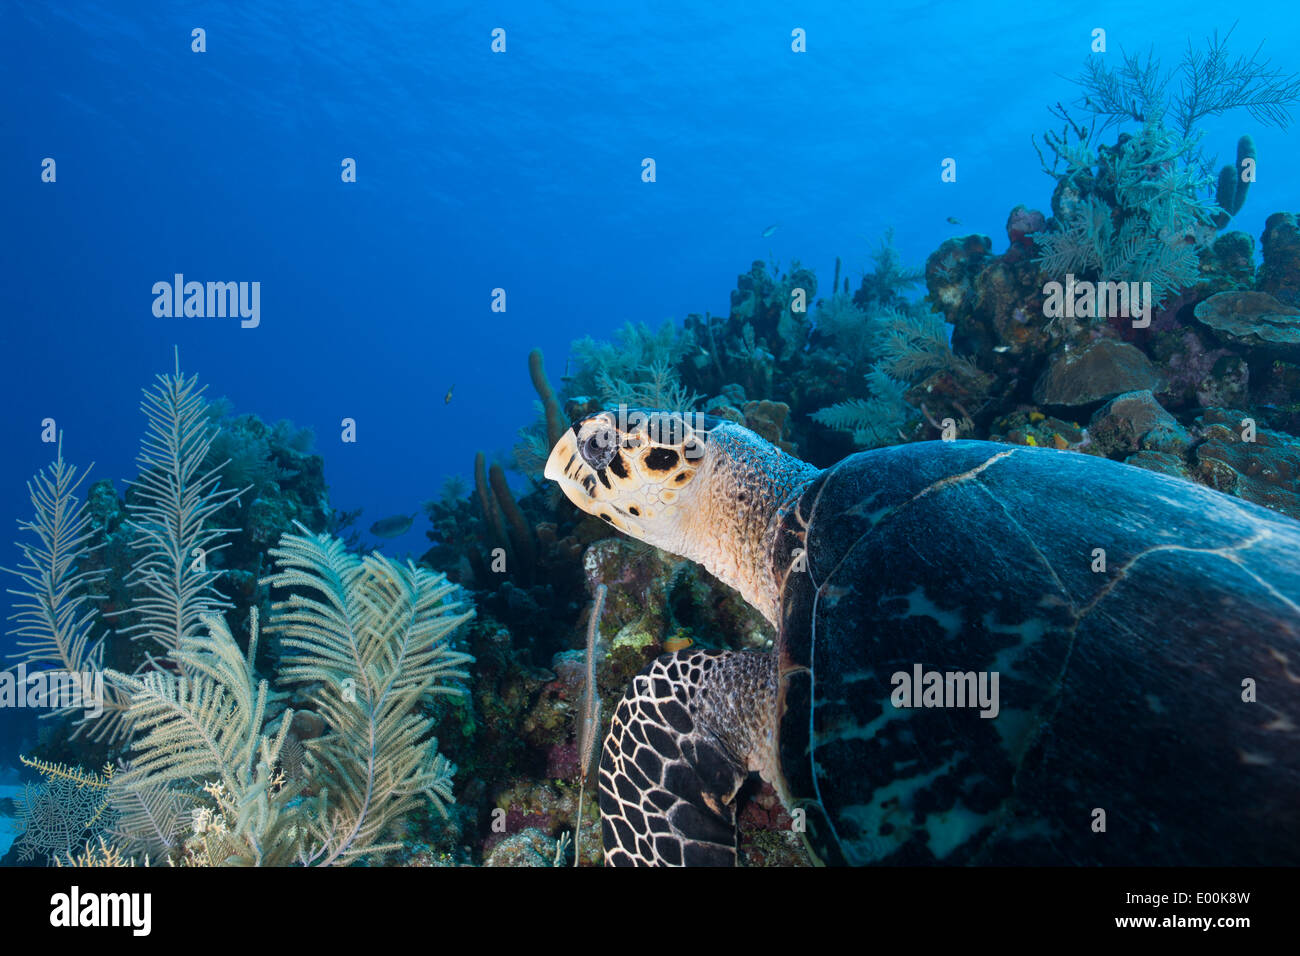 Atlantic Hawksbill Turtle (Eretmochelys imbricata imbricata) swimming over a tropical coral reef off Roatan, Honduras. Stock Photo